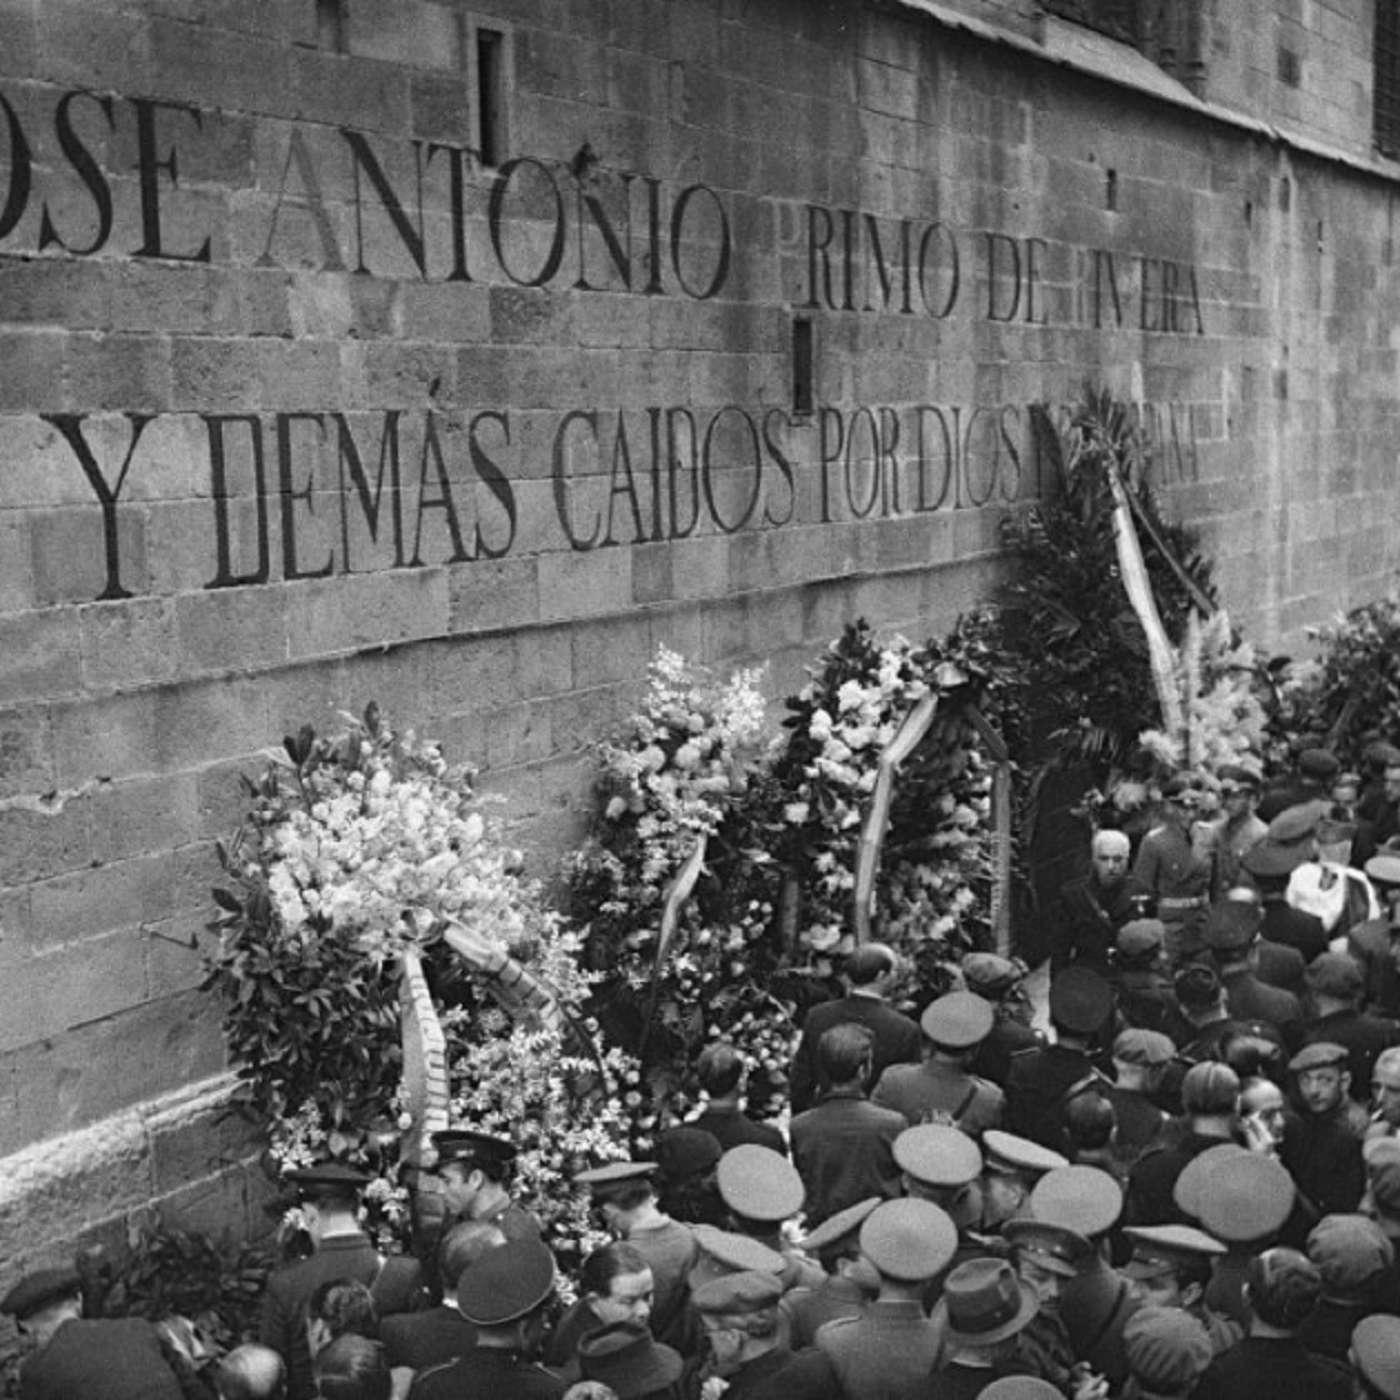 El règim franquista ret homenatge als pistolers anticatalanistes i antisindicalistes